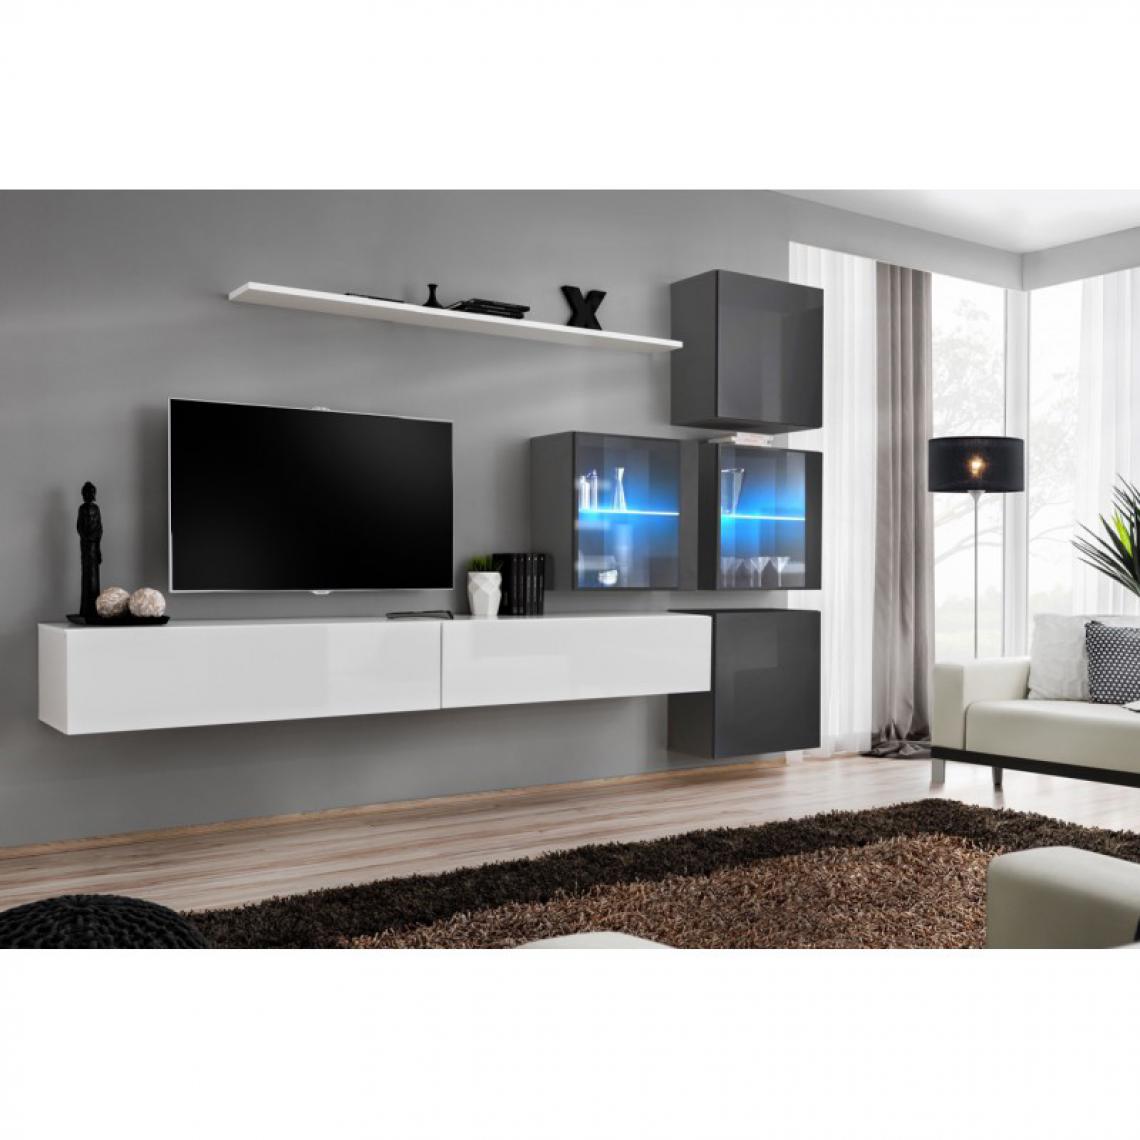 Ac-Deco - Meuble TV Mural Design Switch XIX 310cm Blanc & Gris - Meubles TV, Hi-Fi